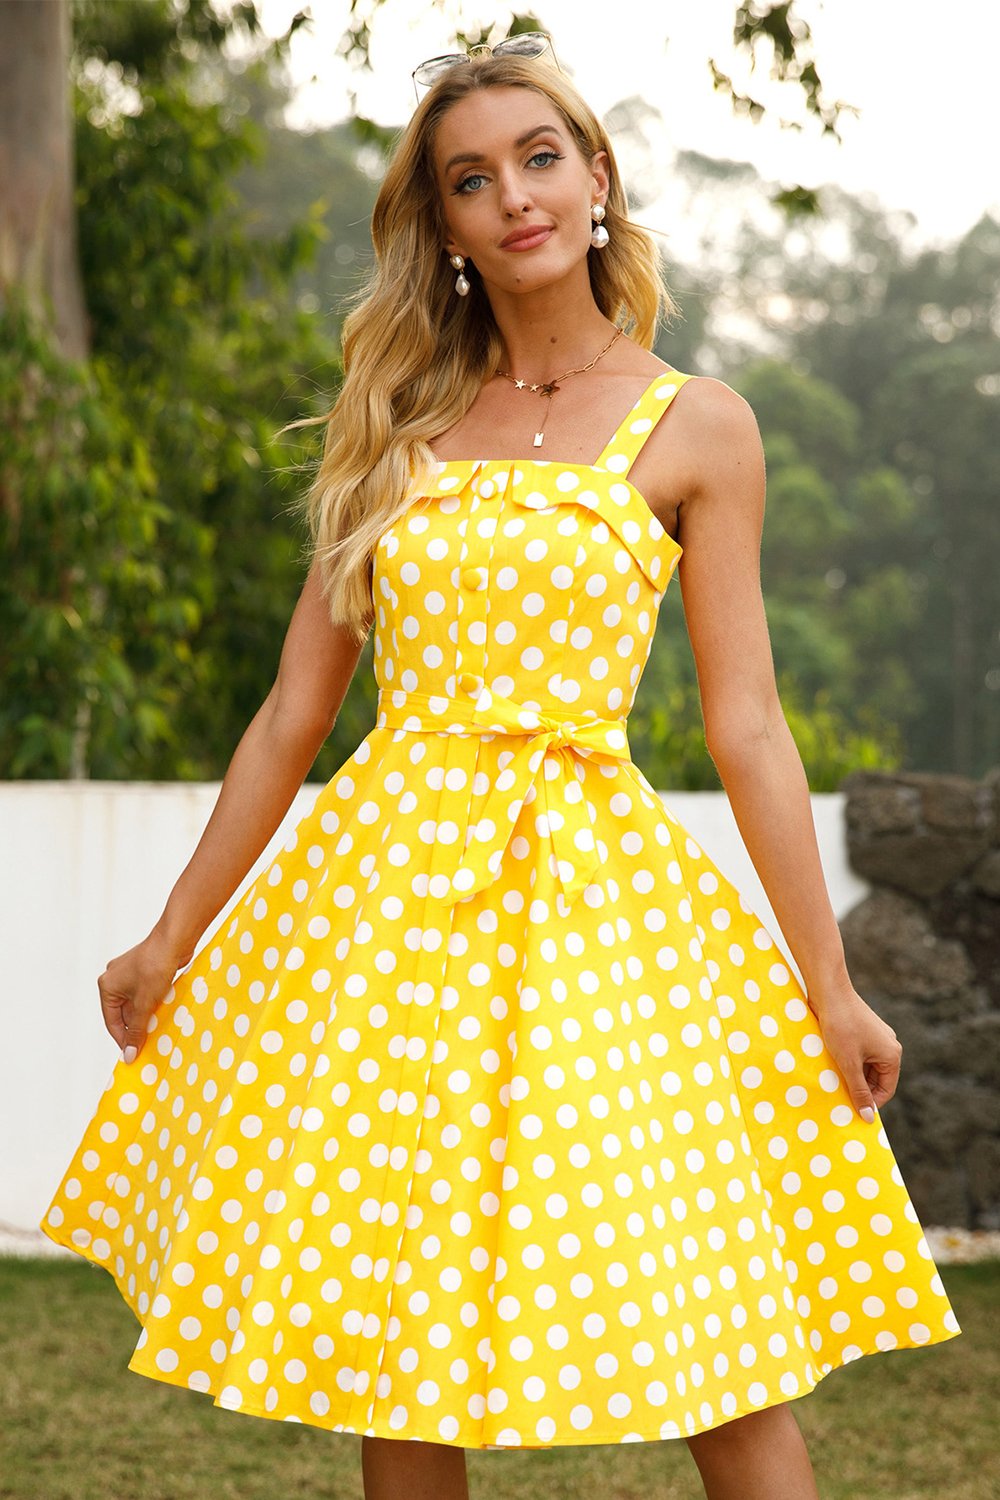 Punti polka gialli anni '50 Sundress